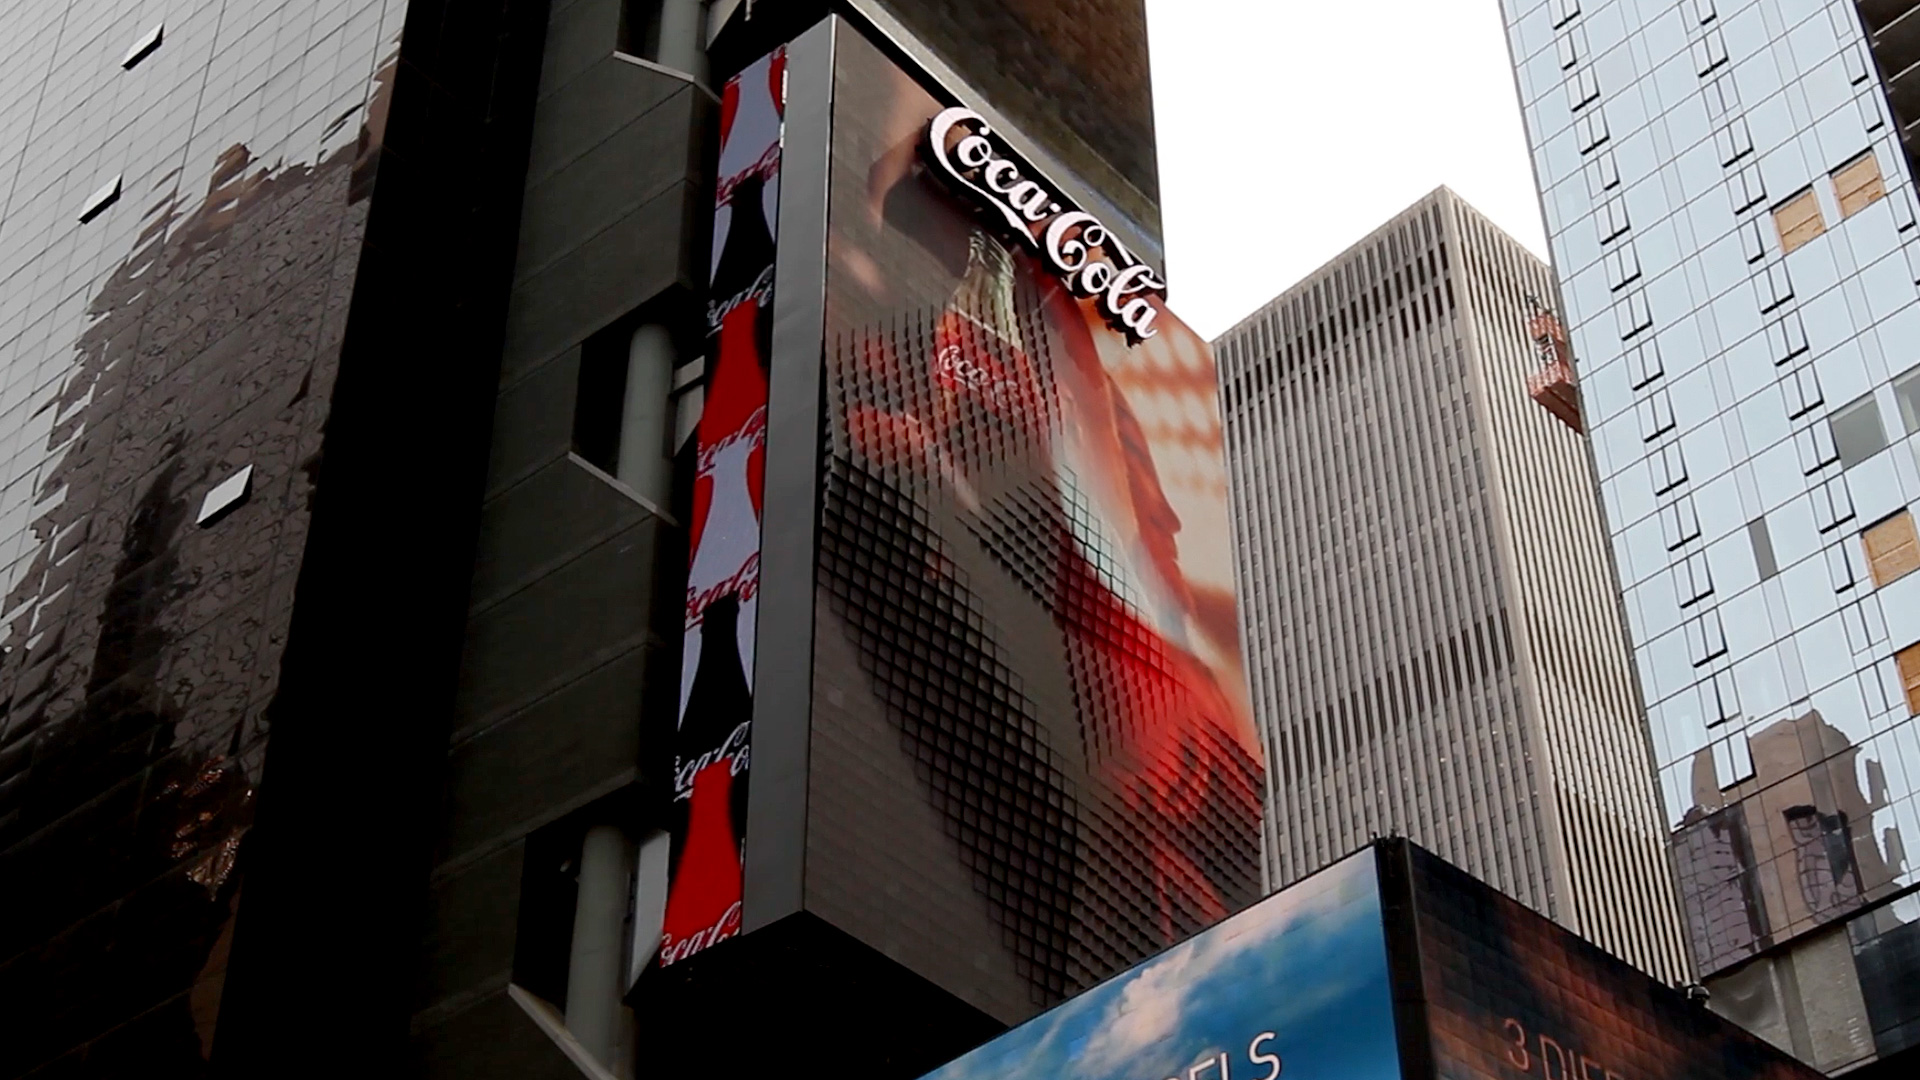 Coca Cola Time Square 3D Robotic Billboard and Experiential